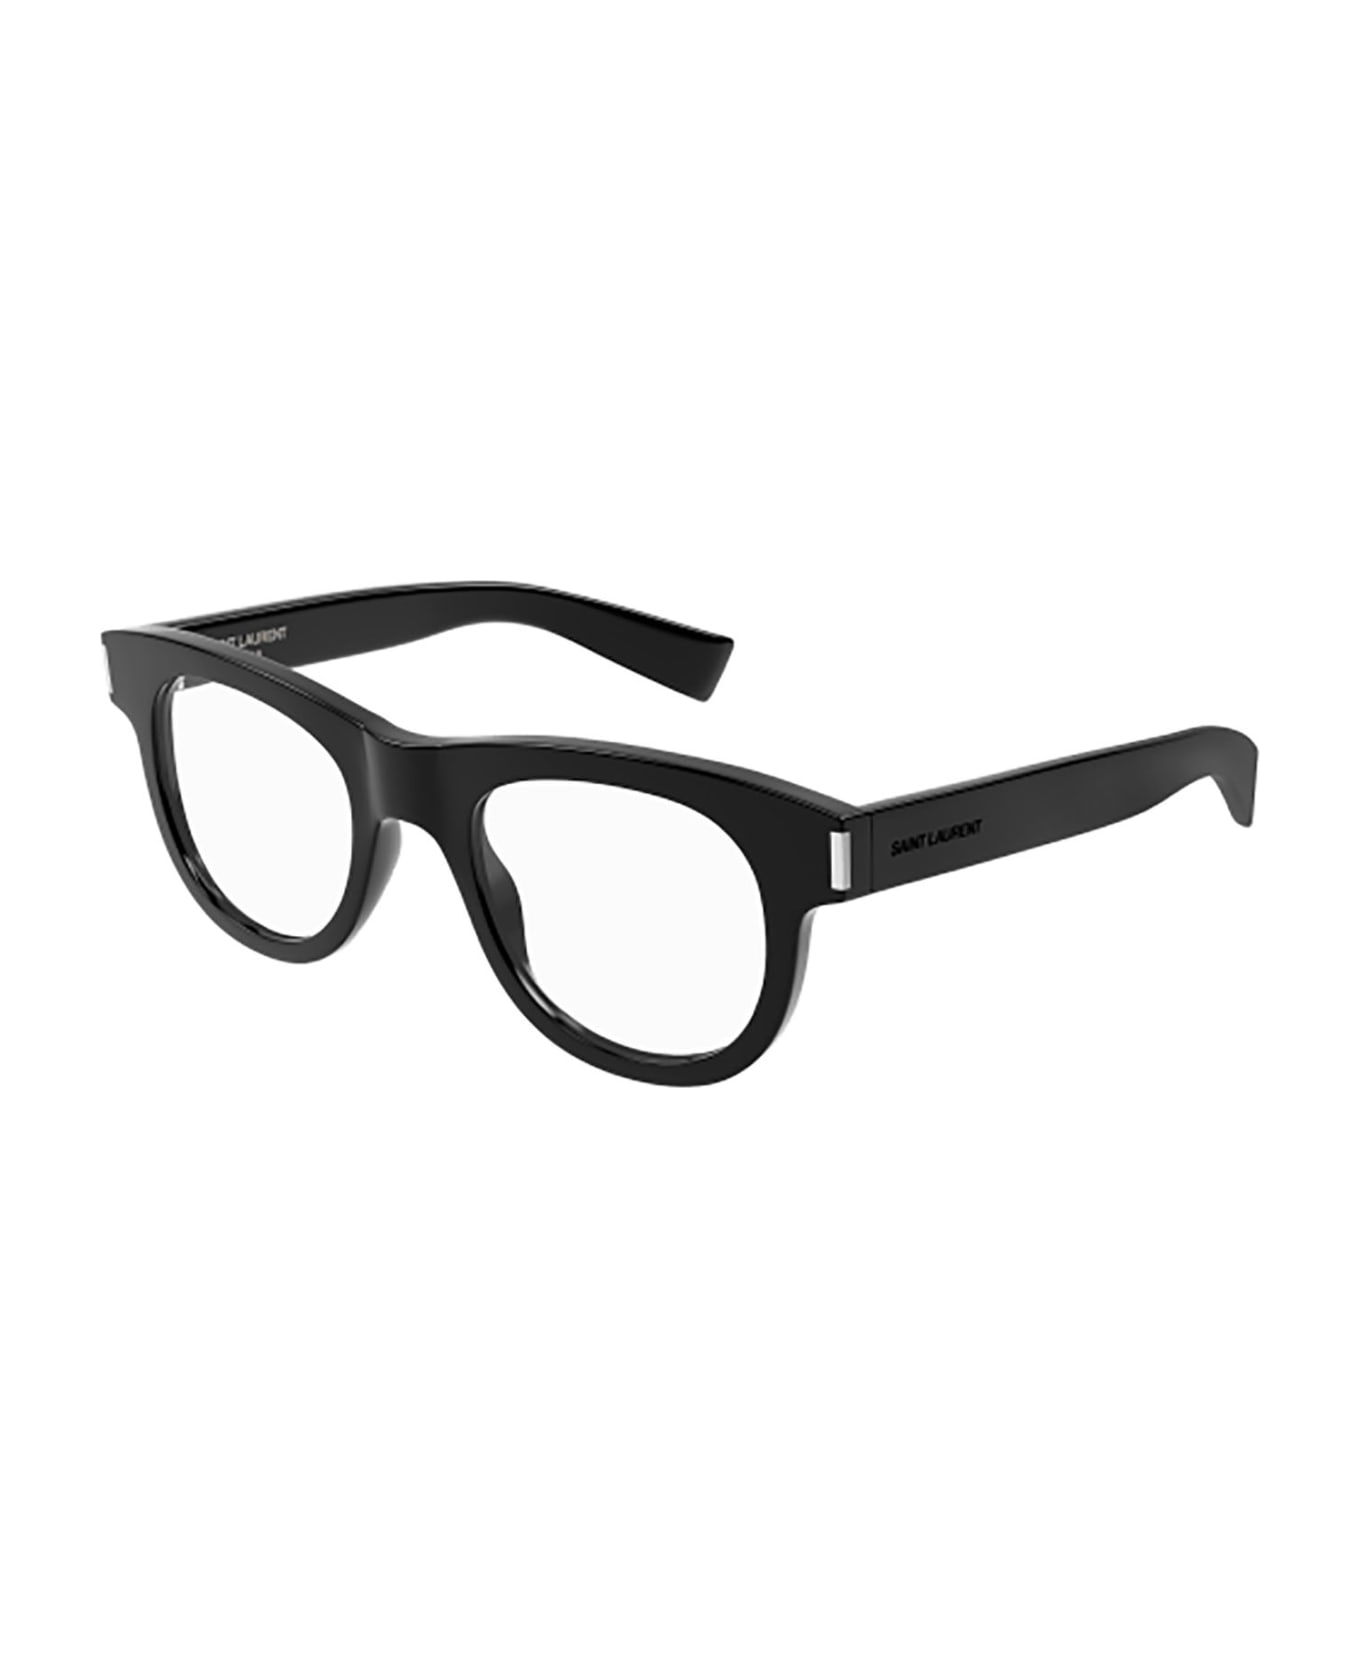 Saint Laurent Eyewear SL 571 OPT Eyewear - Black Black Transpare